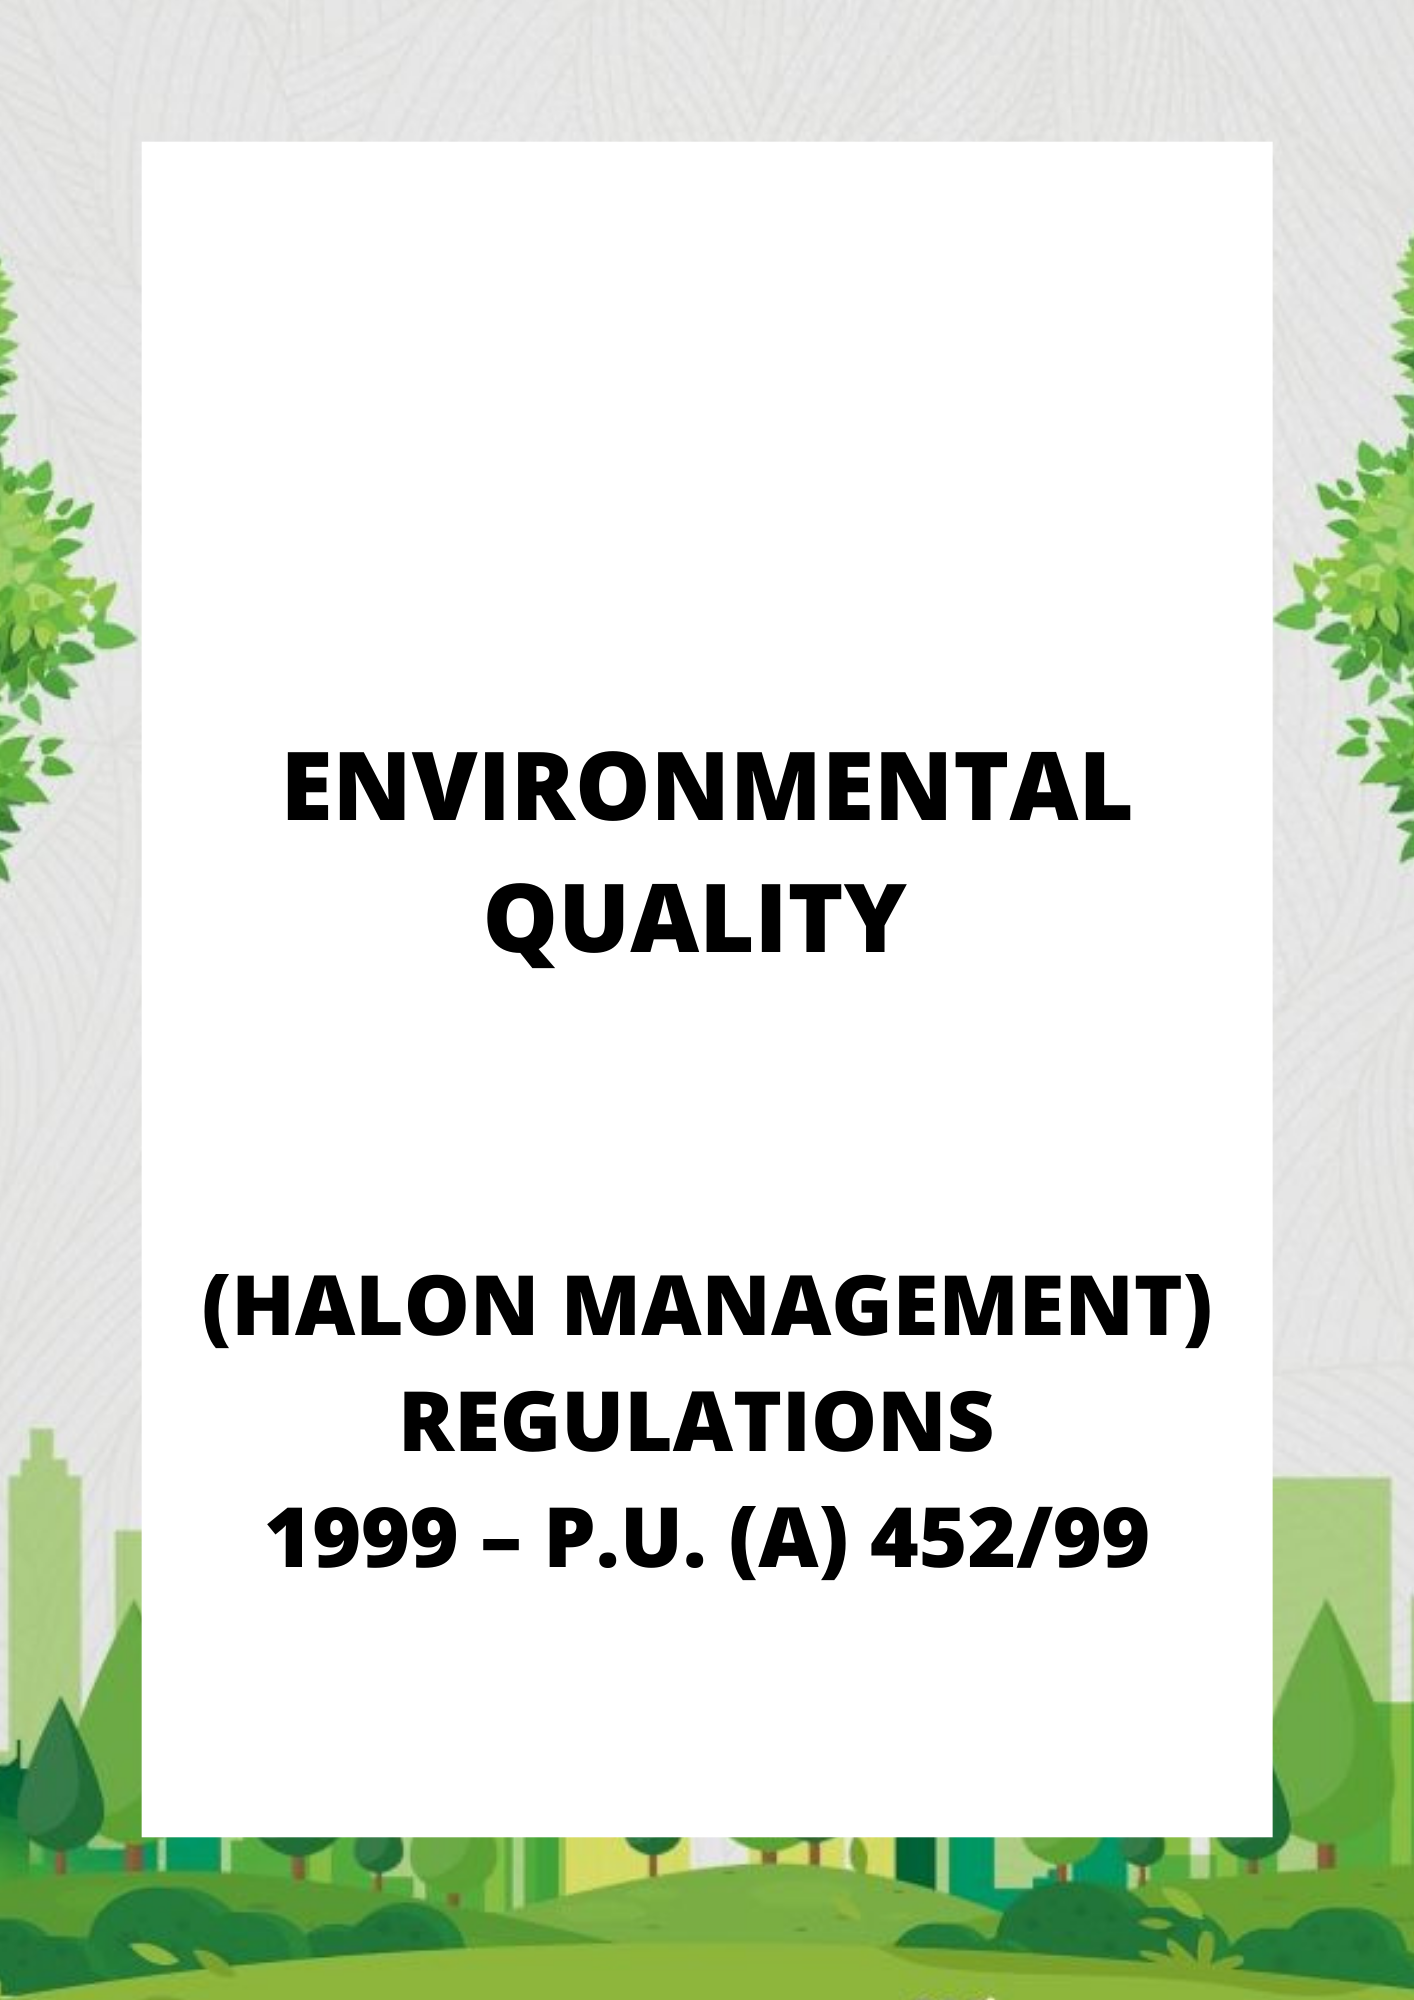 Environmental Quality (Halon Management) Regulations 1999 – P.U. (A) 45299